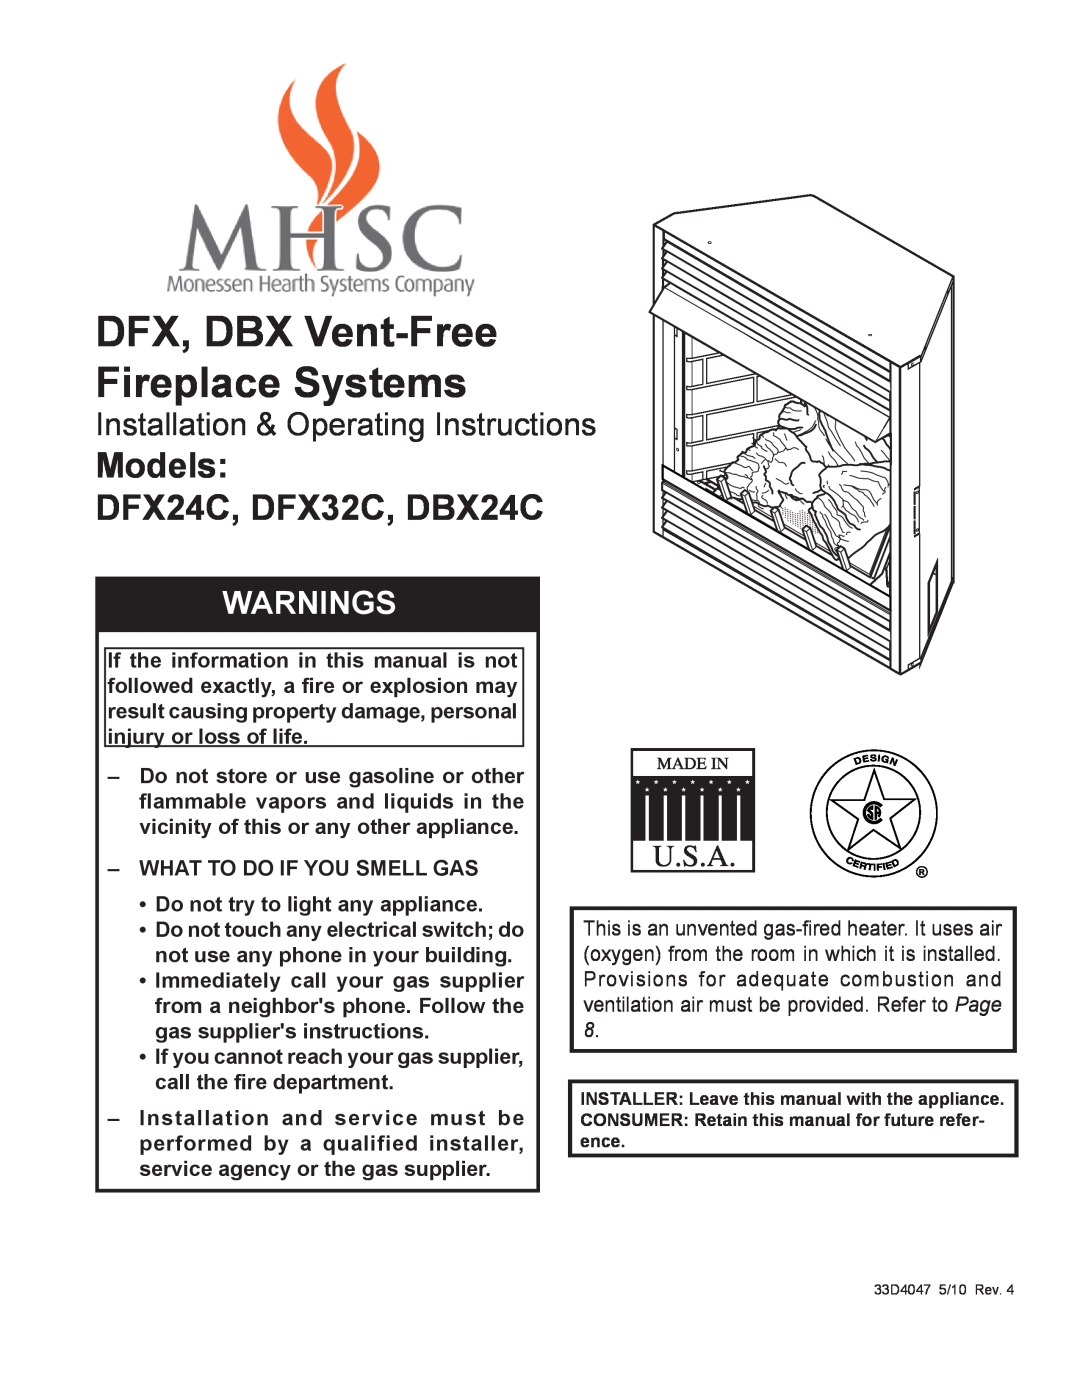 Monessen Hearth operating instructions DFX, DBX Vent-FreeFireplace Systems, Models DFX24C, DFX32C, DBX24C, Warnings 